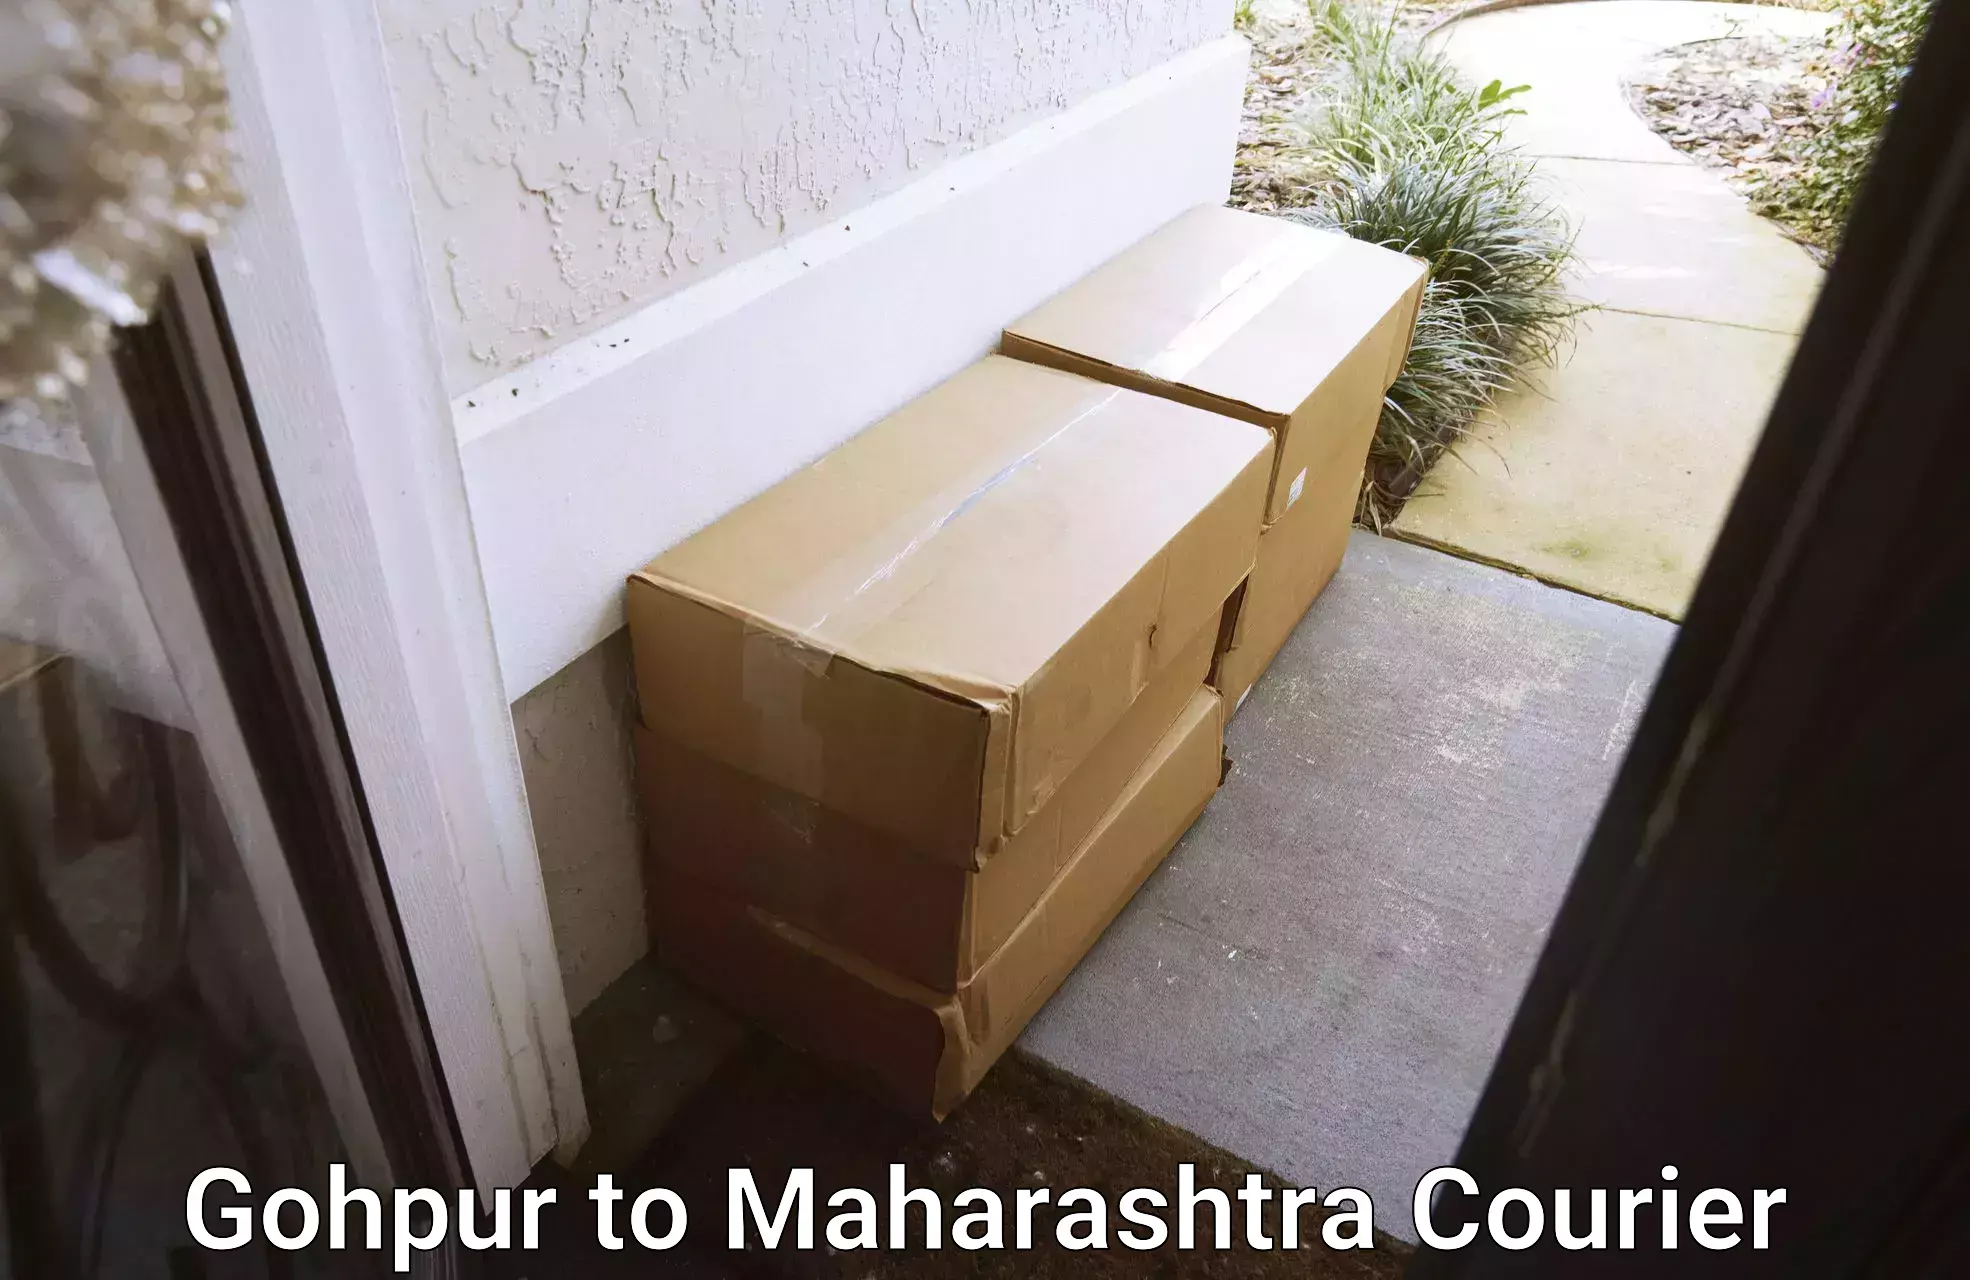 Pharmaceutical courier Gohpur to Mumbai Port